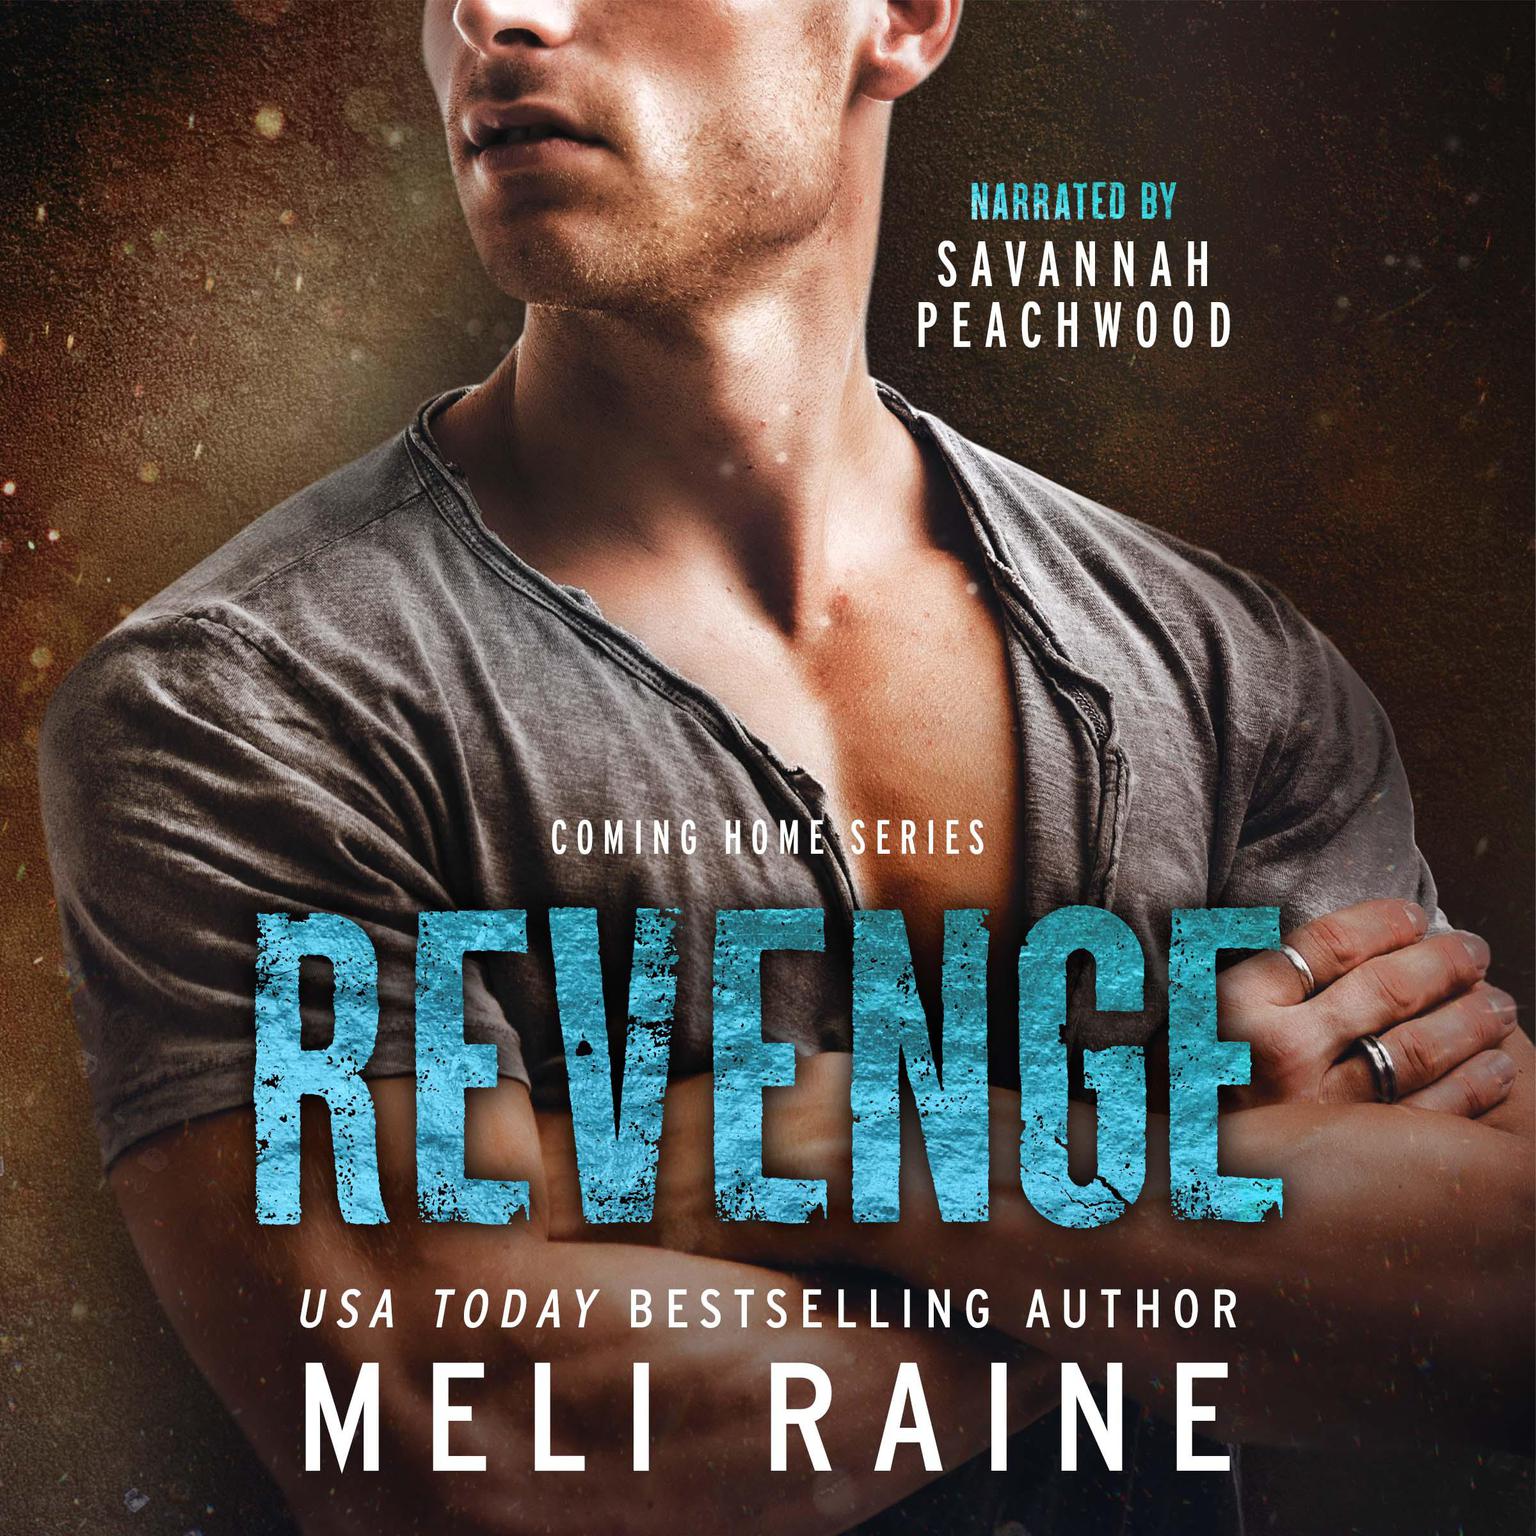 Revenge Audiobook, by Meli Raine